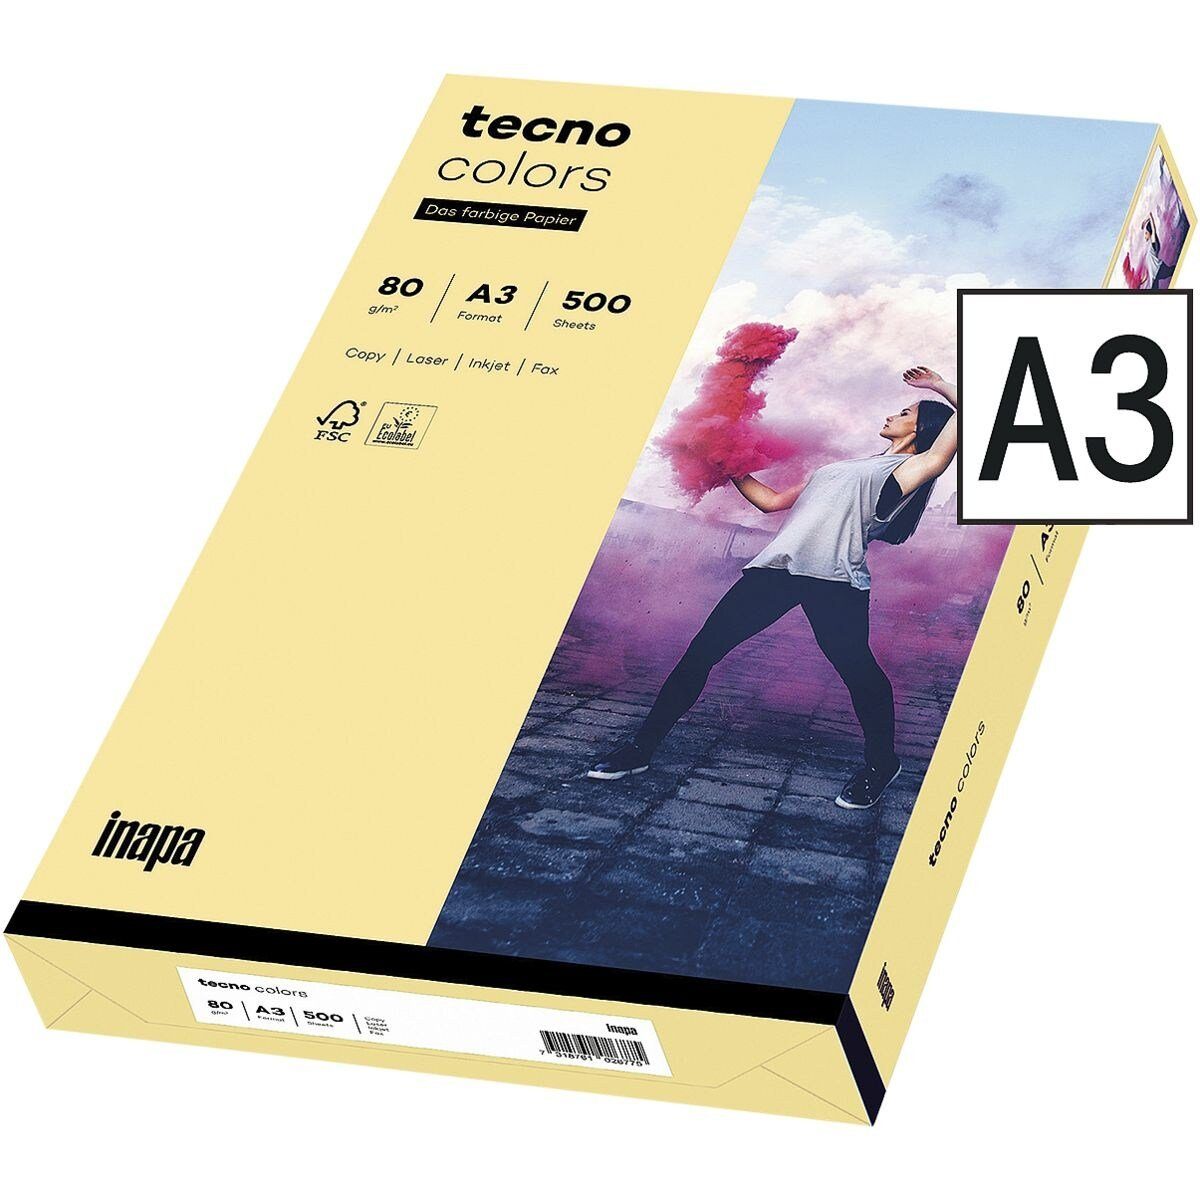 Drucker- A3, tecno g/m², Inapa und 80 DIN Format / Pastellfarben, Kopierpapier Colors, 500 Blatt tecno chamois Rainbow